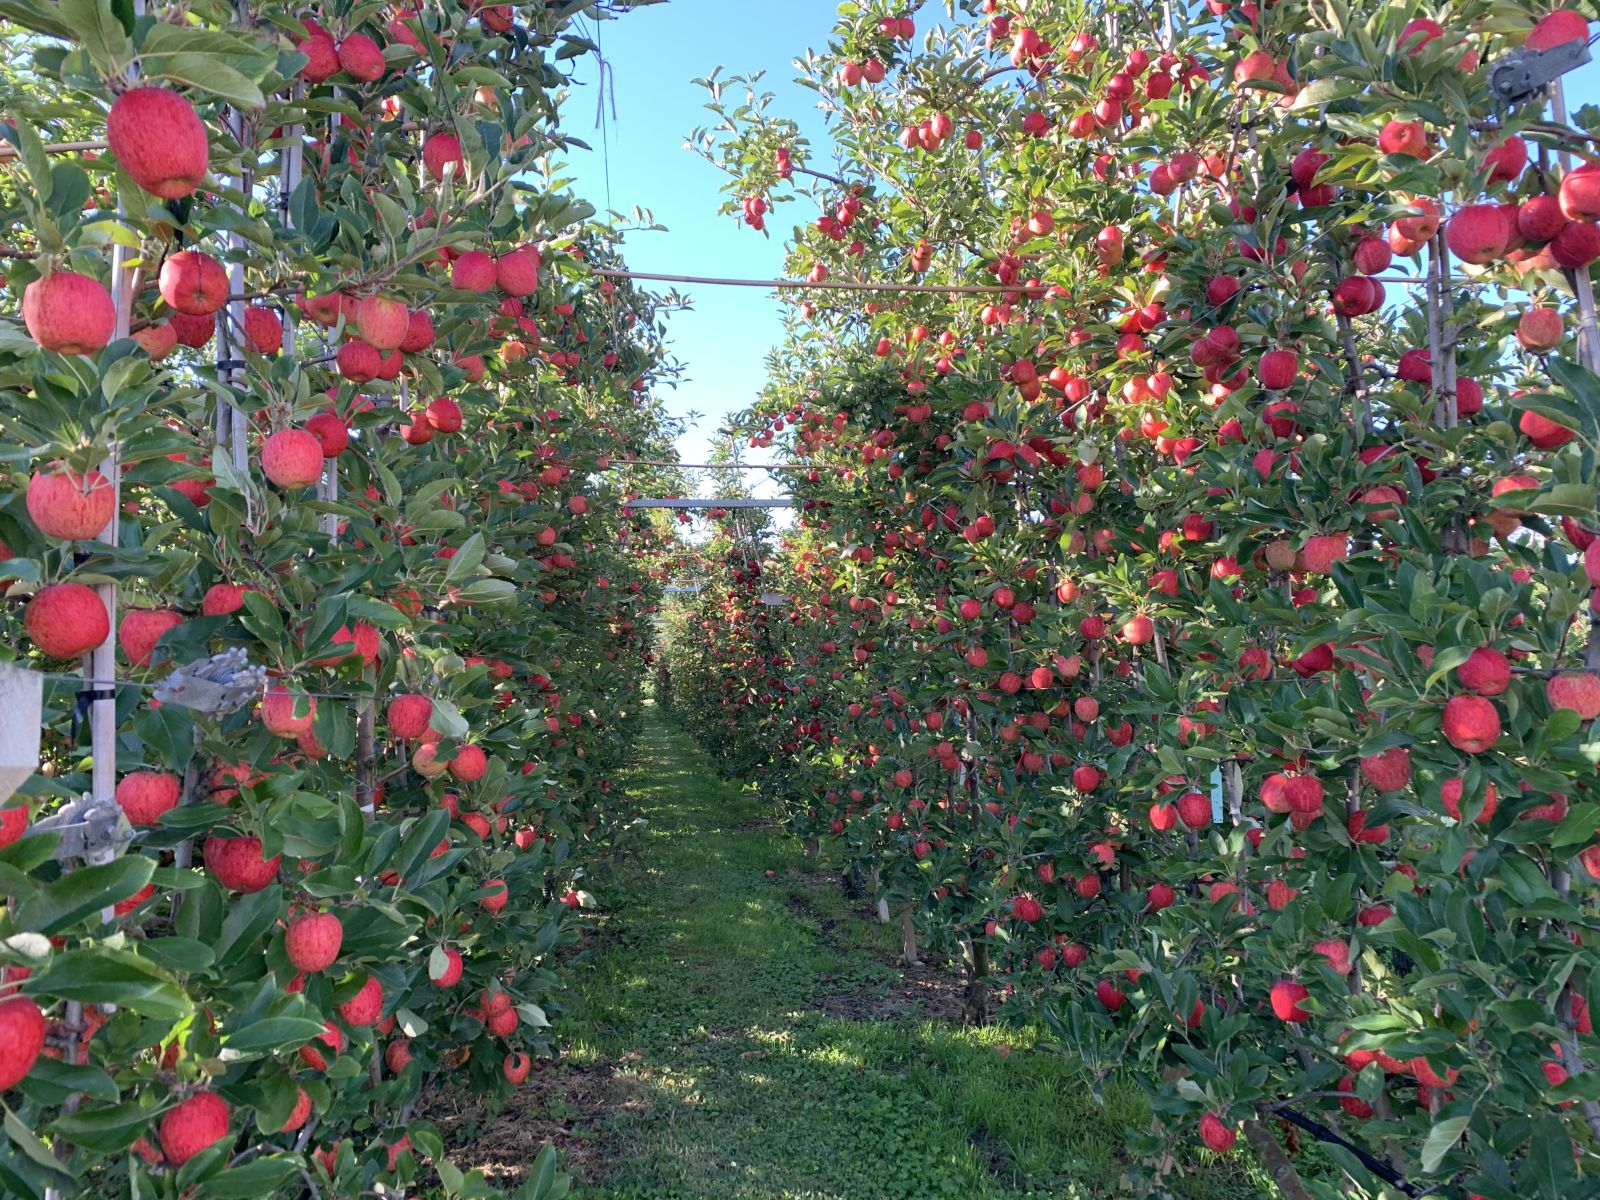 The Future Orchard